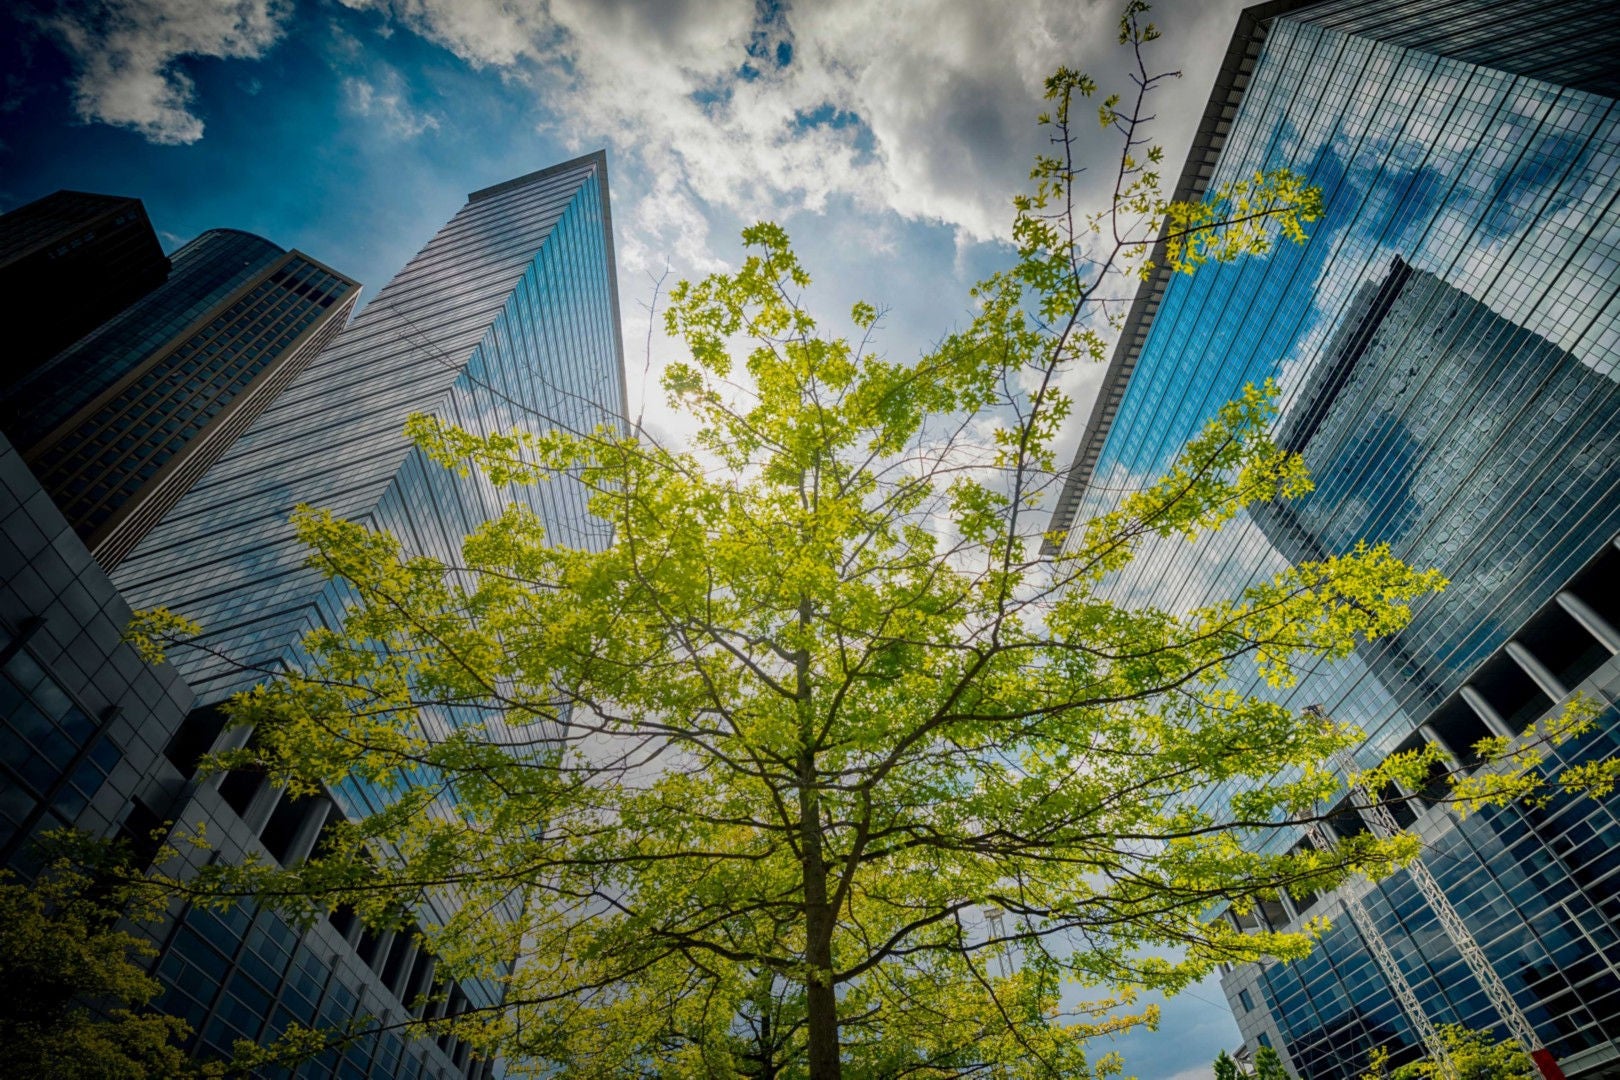 ey-trees-between-modern-office-building-in-spring